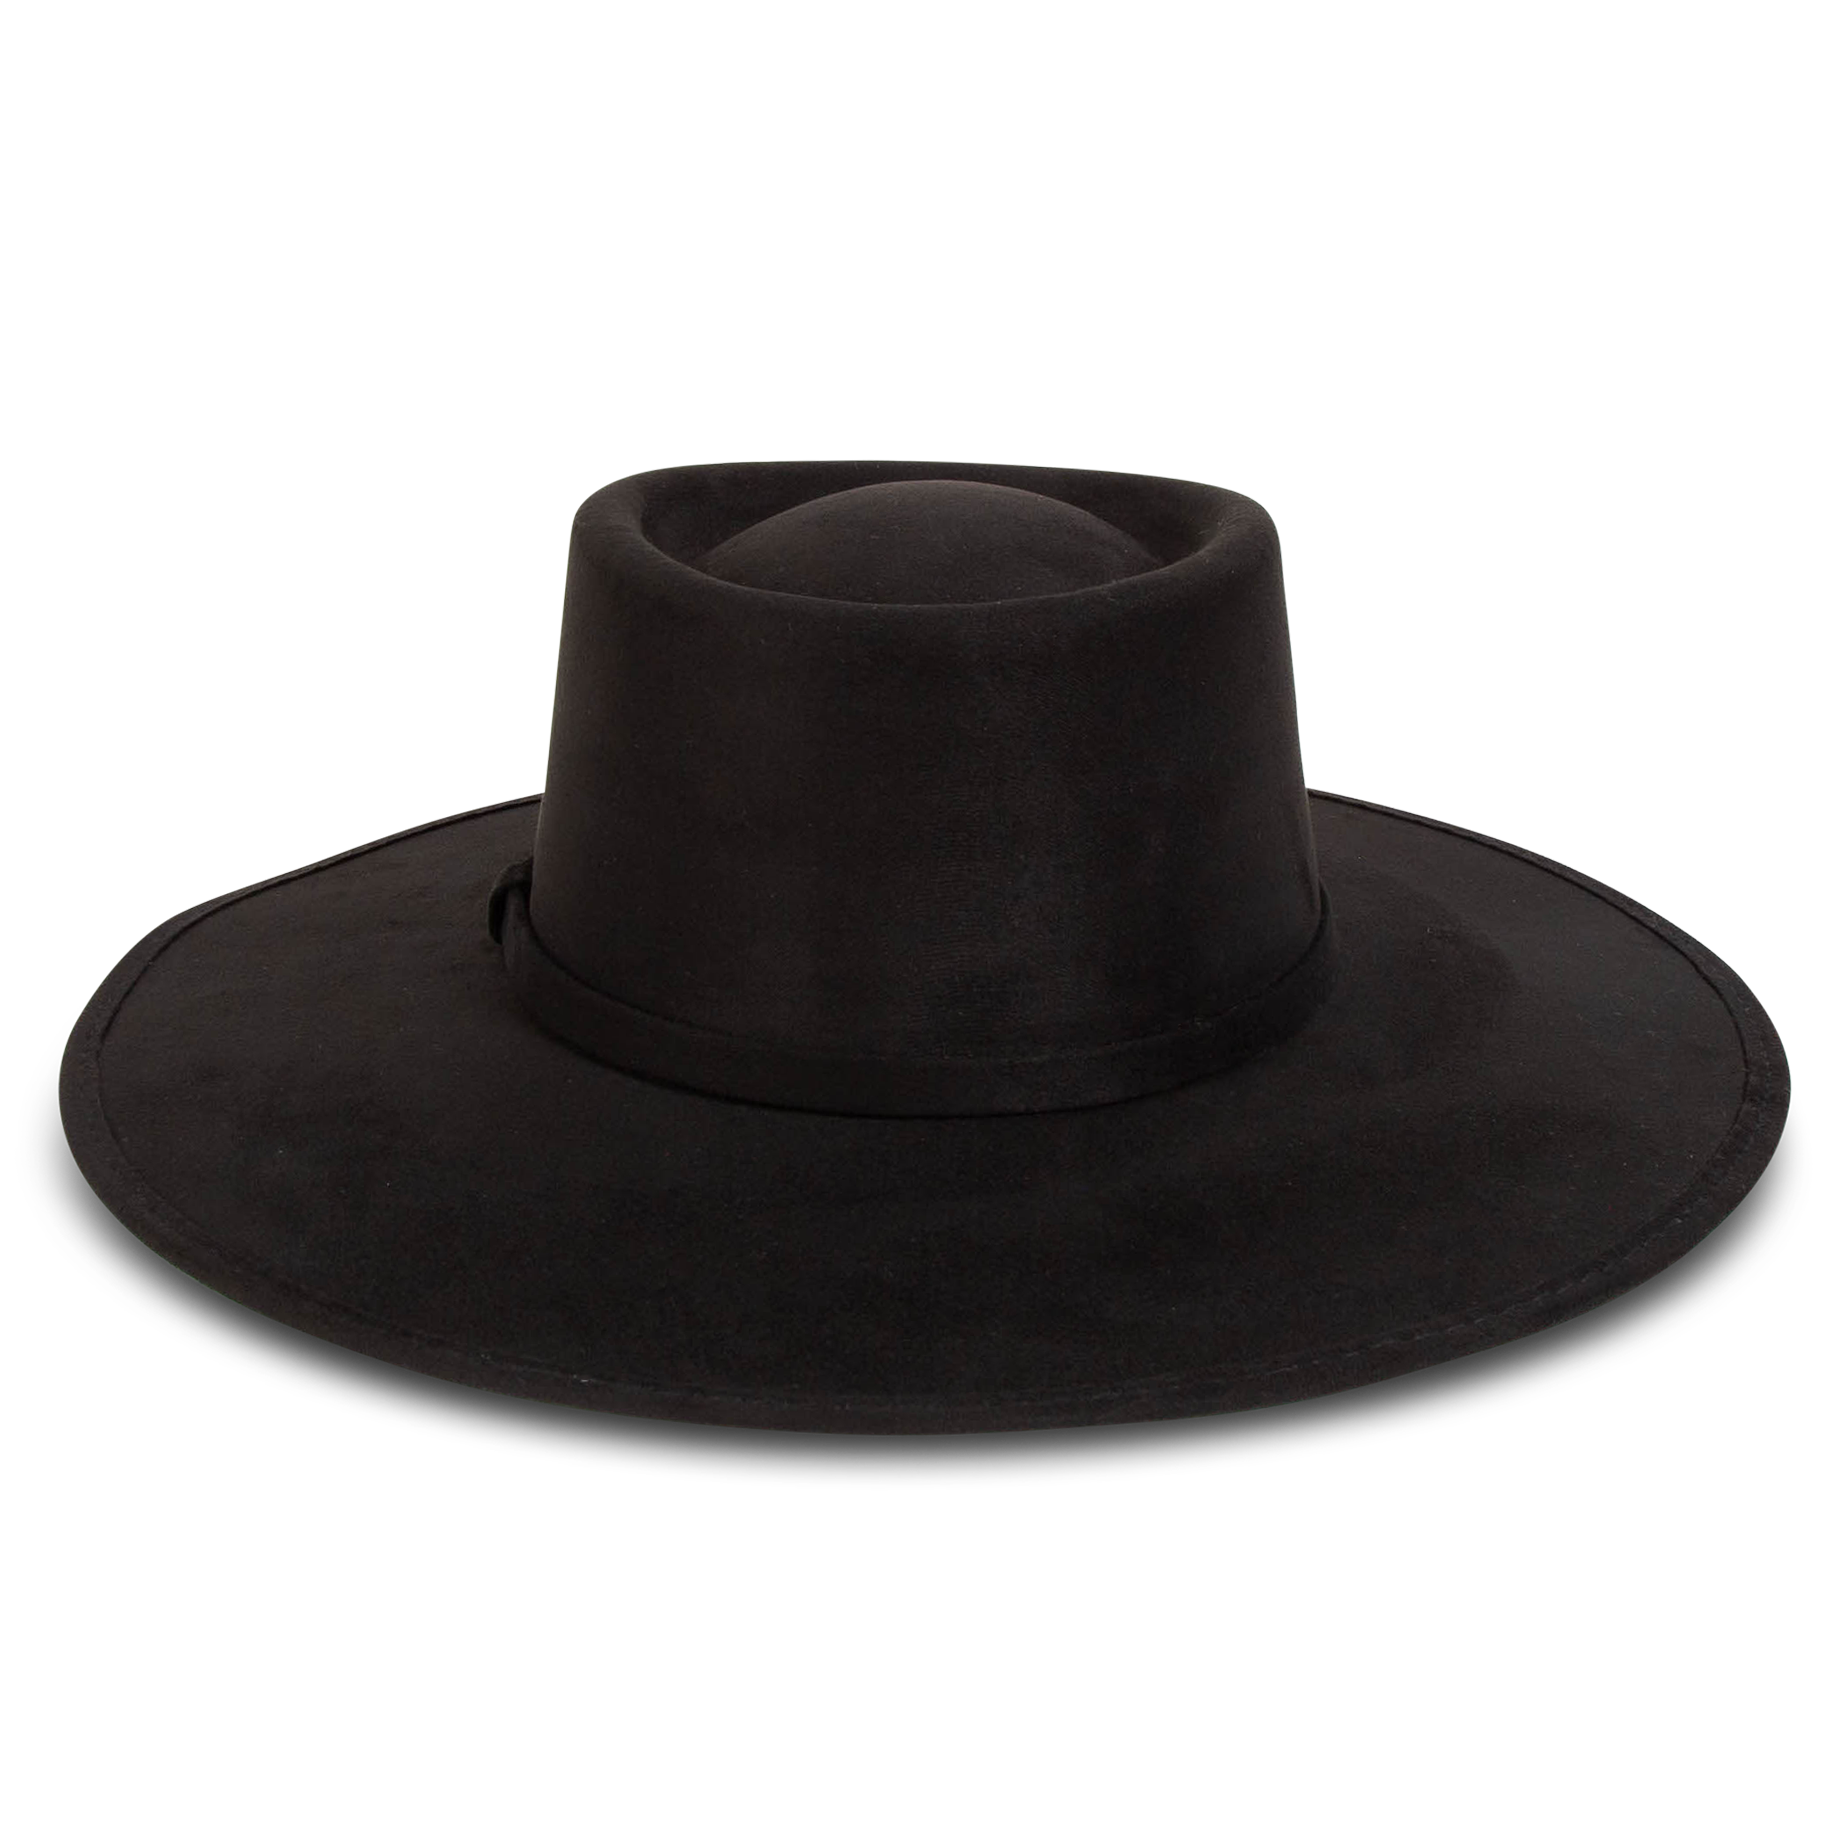 Georgia black back view showing tonal ribbon band on FREEBIRD flat wide brim hat featuring a telescope-shaped crown